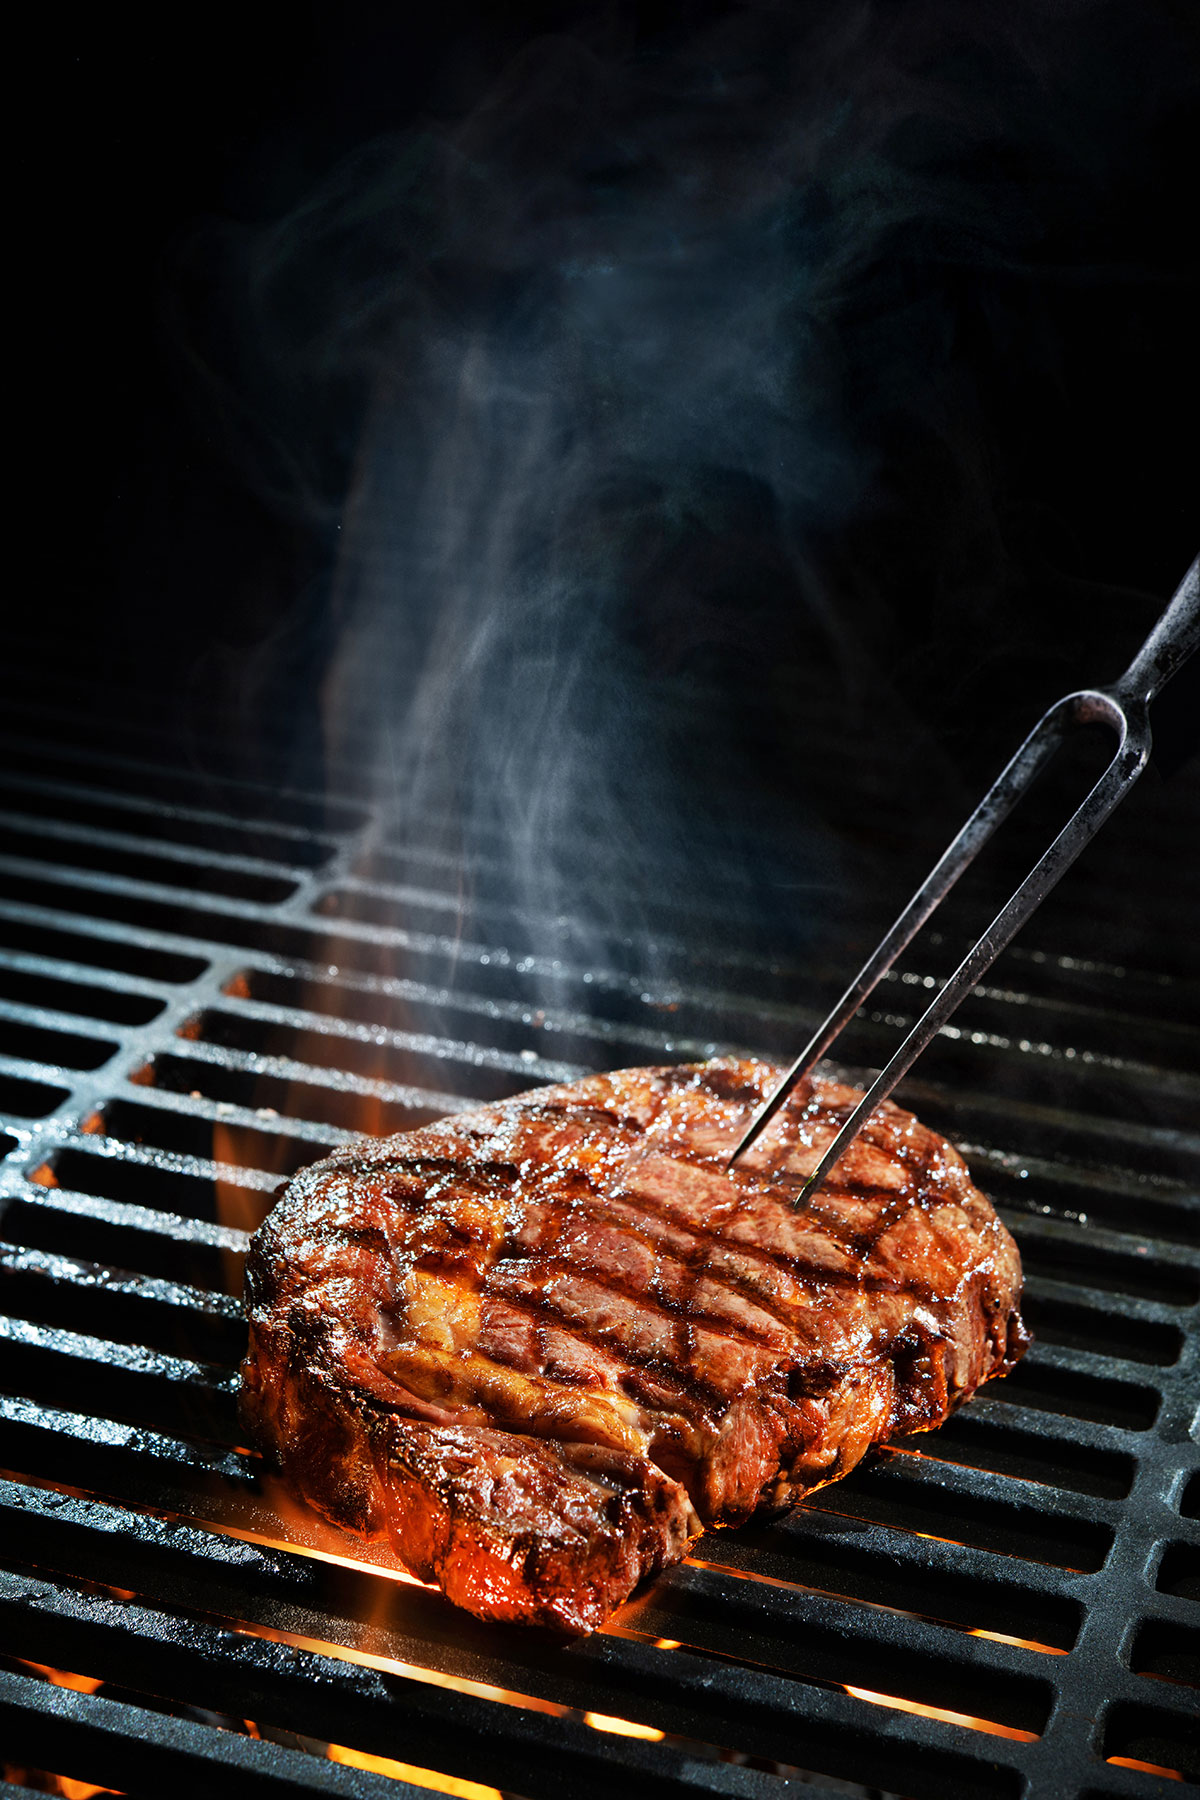 A charred steak on a grill.